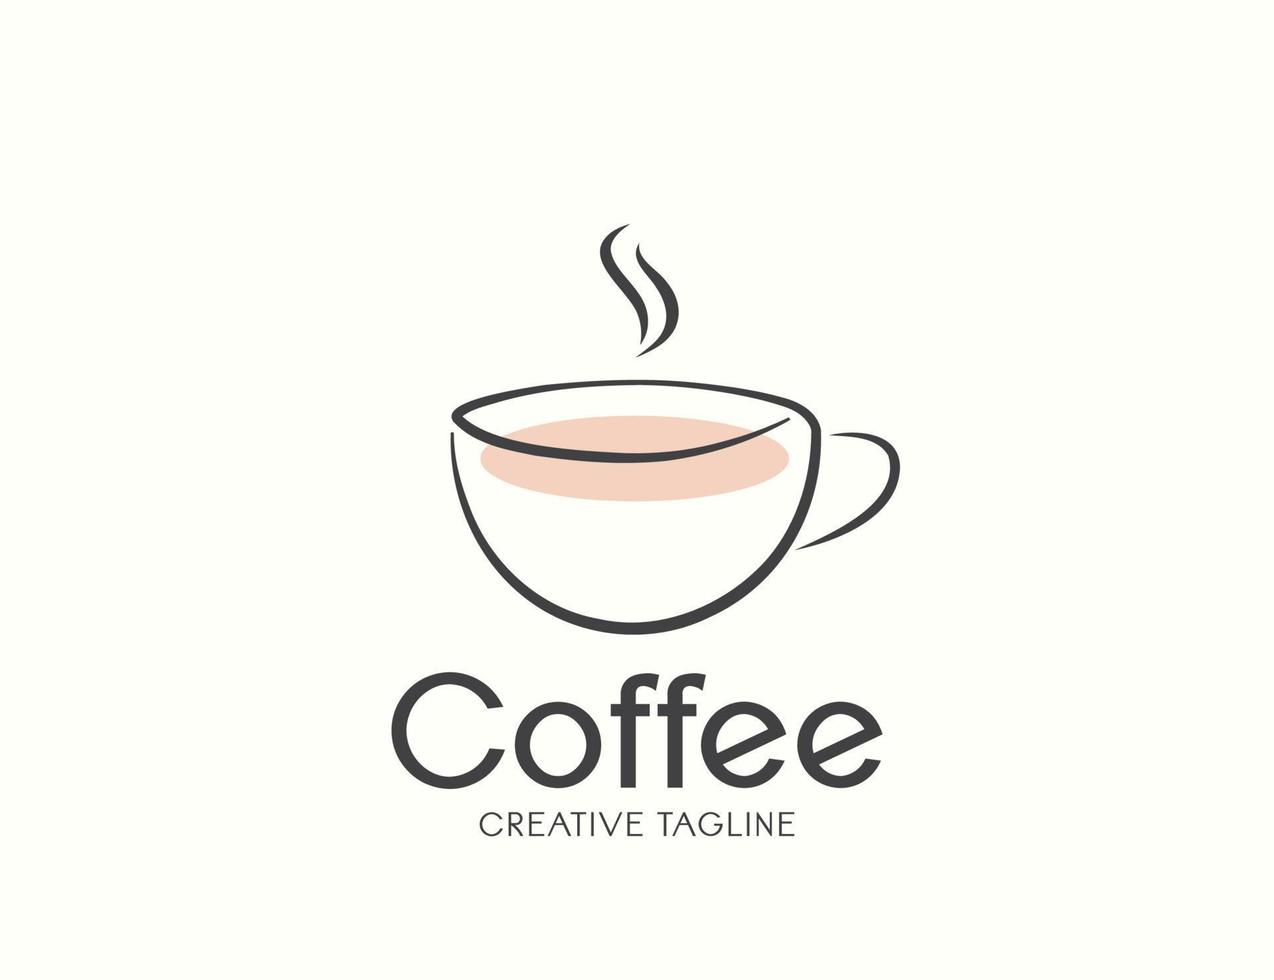 kaffekopp logotyp design vektor